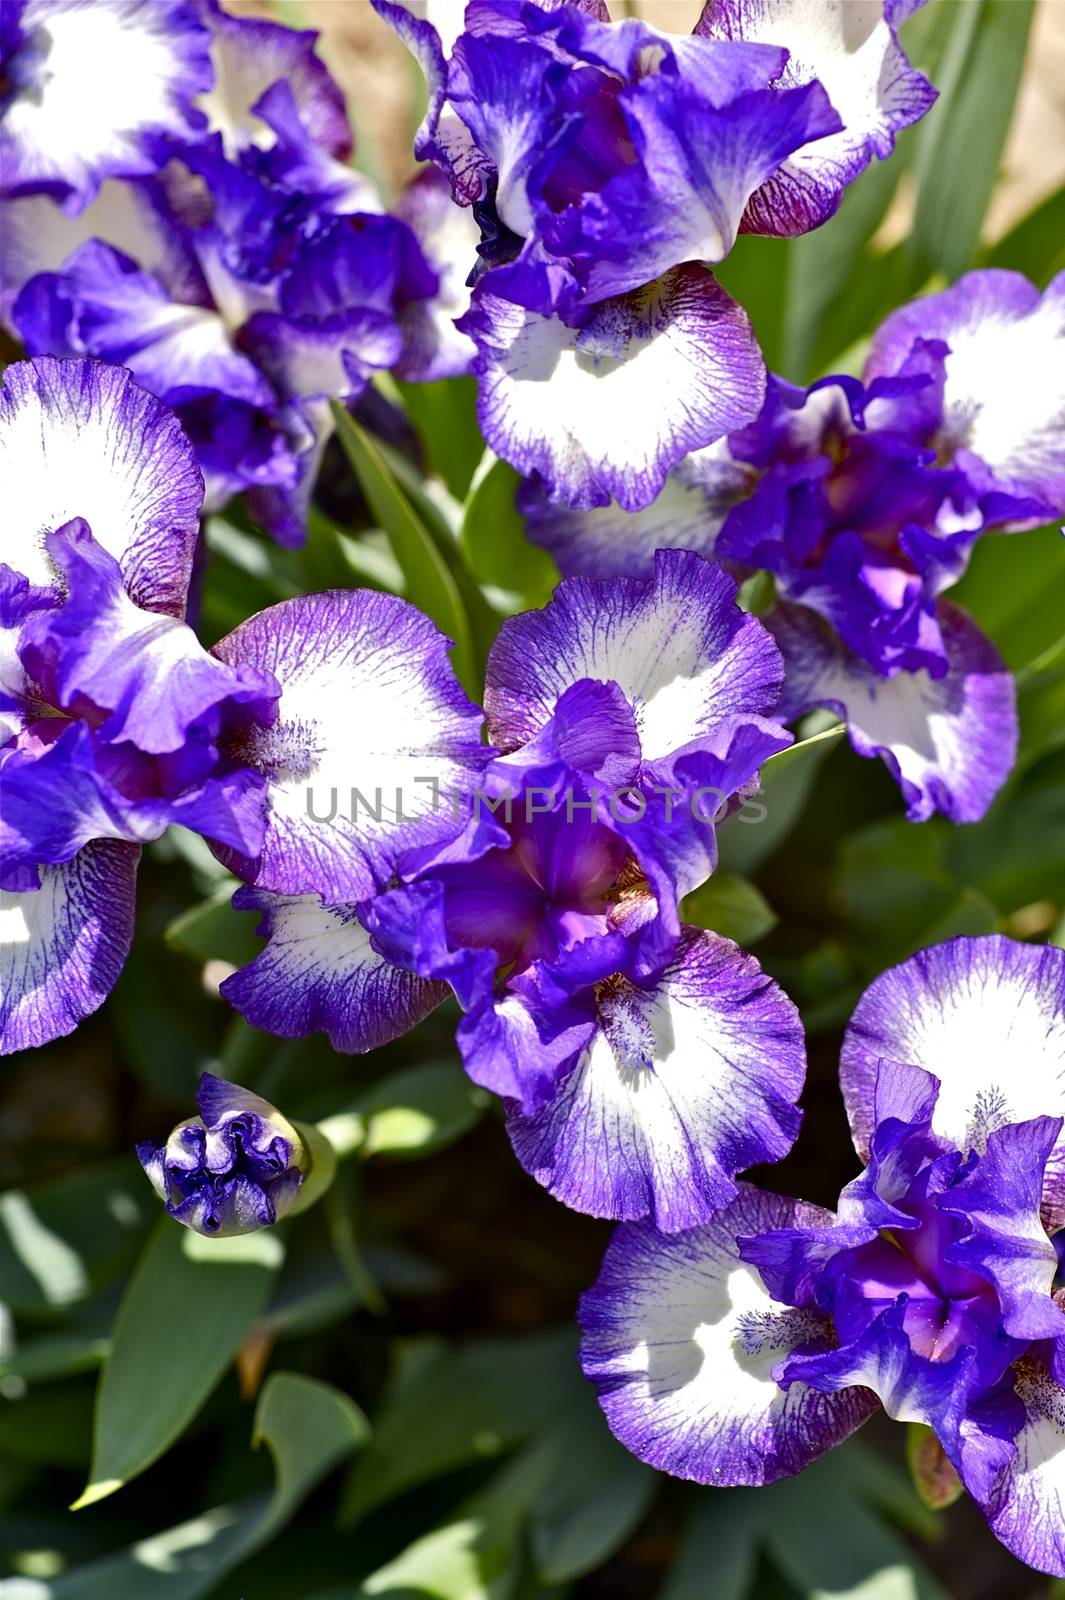 Violet Iris. Iris Dark Rings - Standard Dwarf Bearded iris. Iris Flowers Vertical Photography.